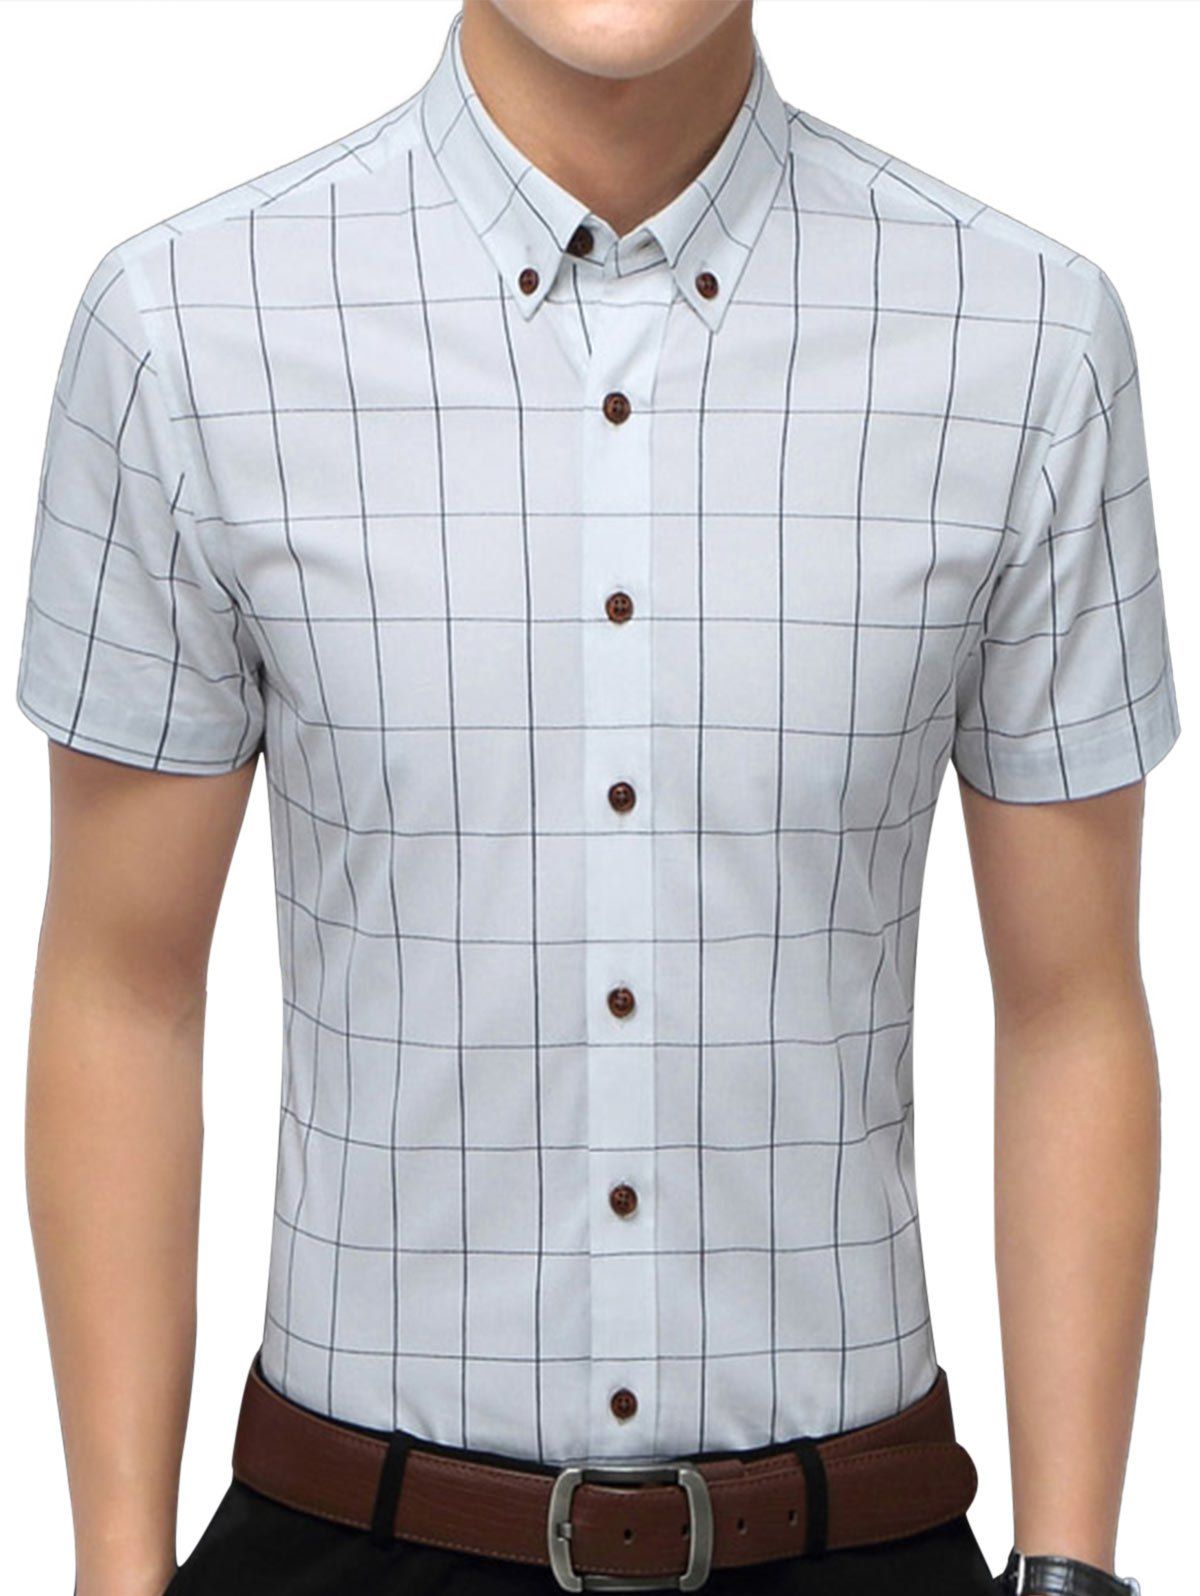 [37% OFF] 2021 Slim Fit Short Sleeve Checkered Shirt In WHITE | DressLily